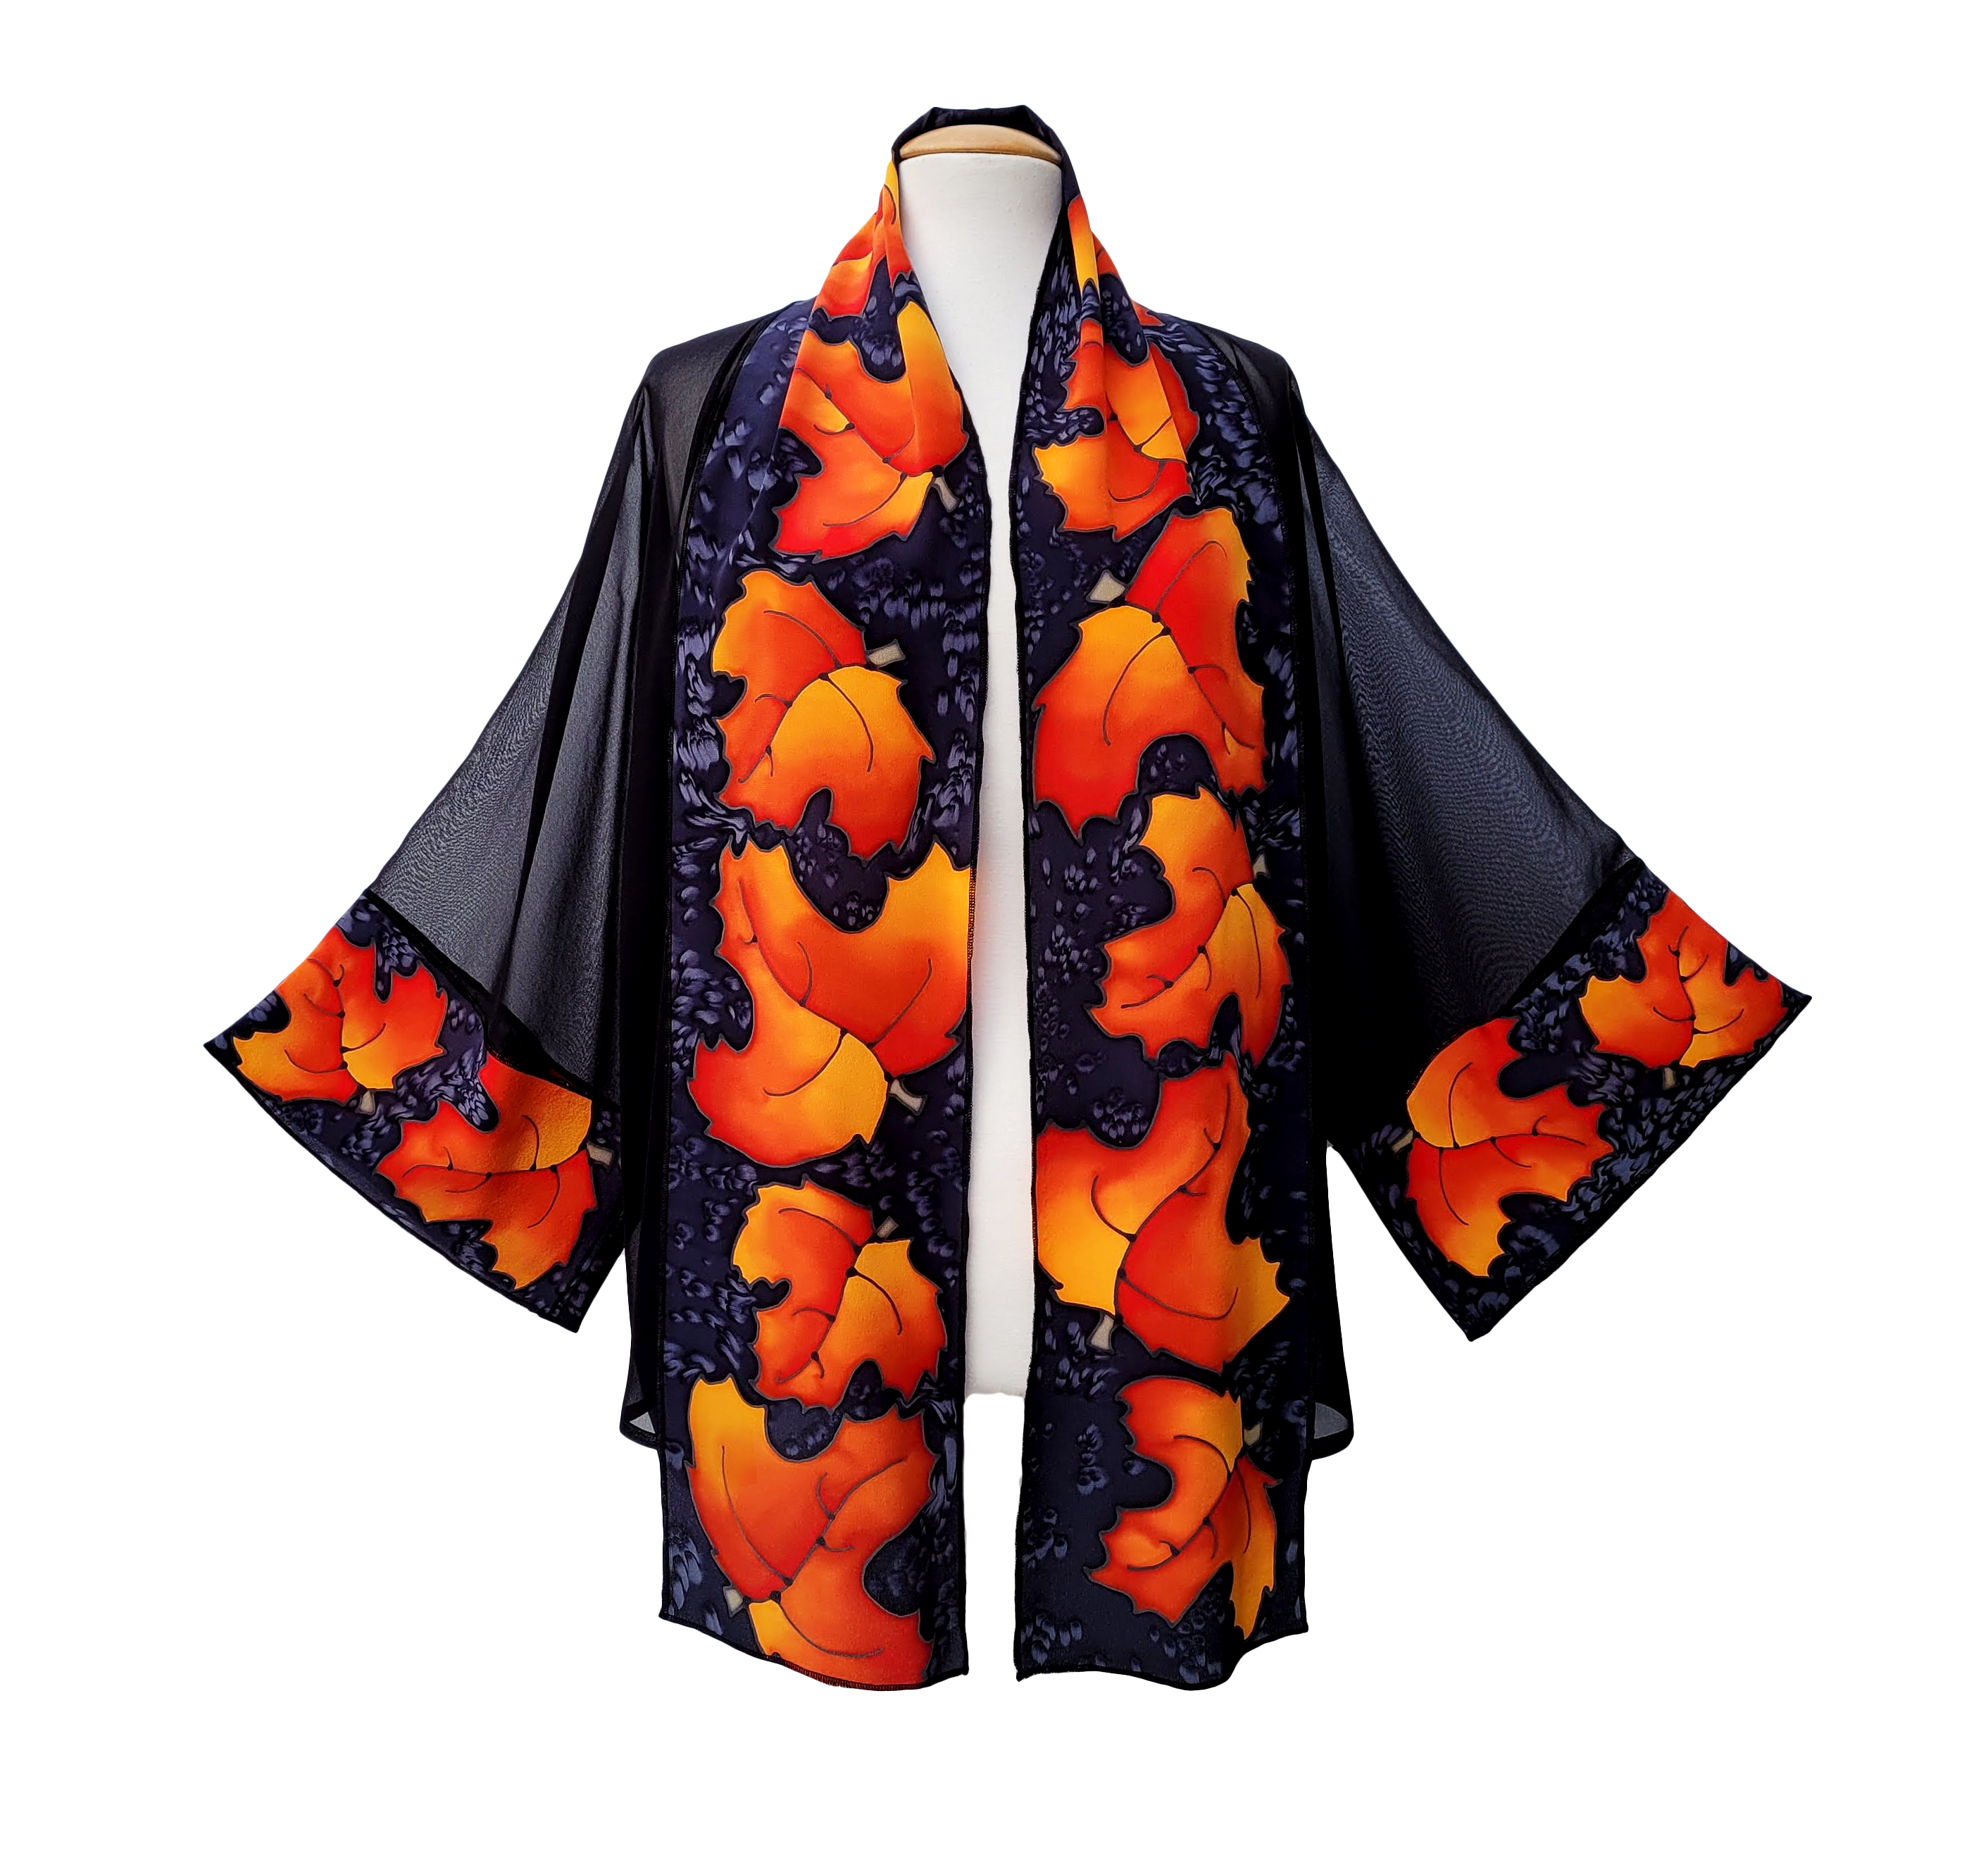 silk clothing hand painted autumn leaf kimono jacket for women handmade by Lynne Kiel